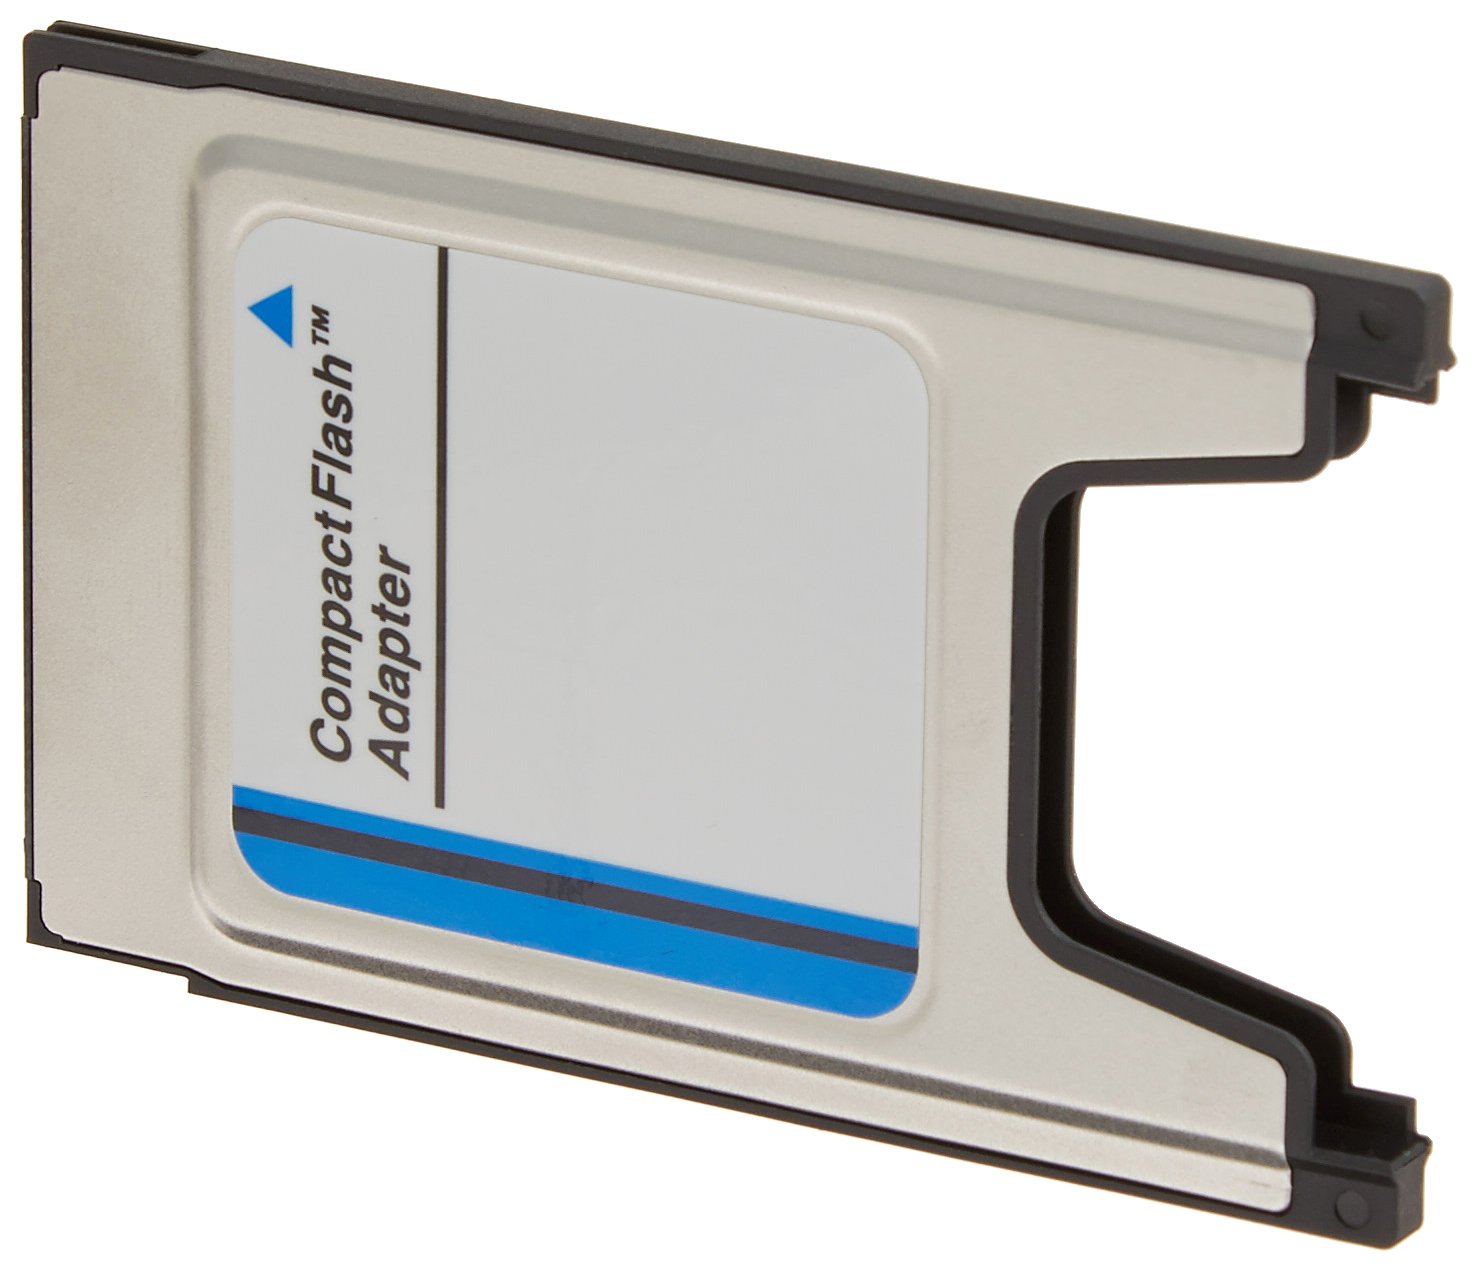 Hioki 9728 Compact Flash Card with PC Card Adapter, 512MB Capacity